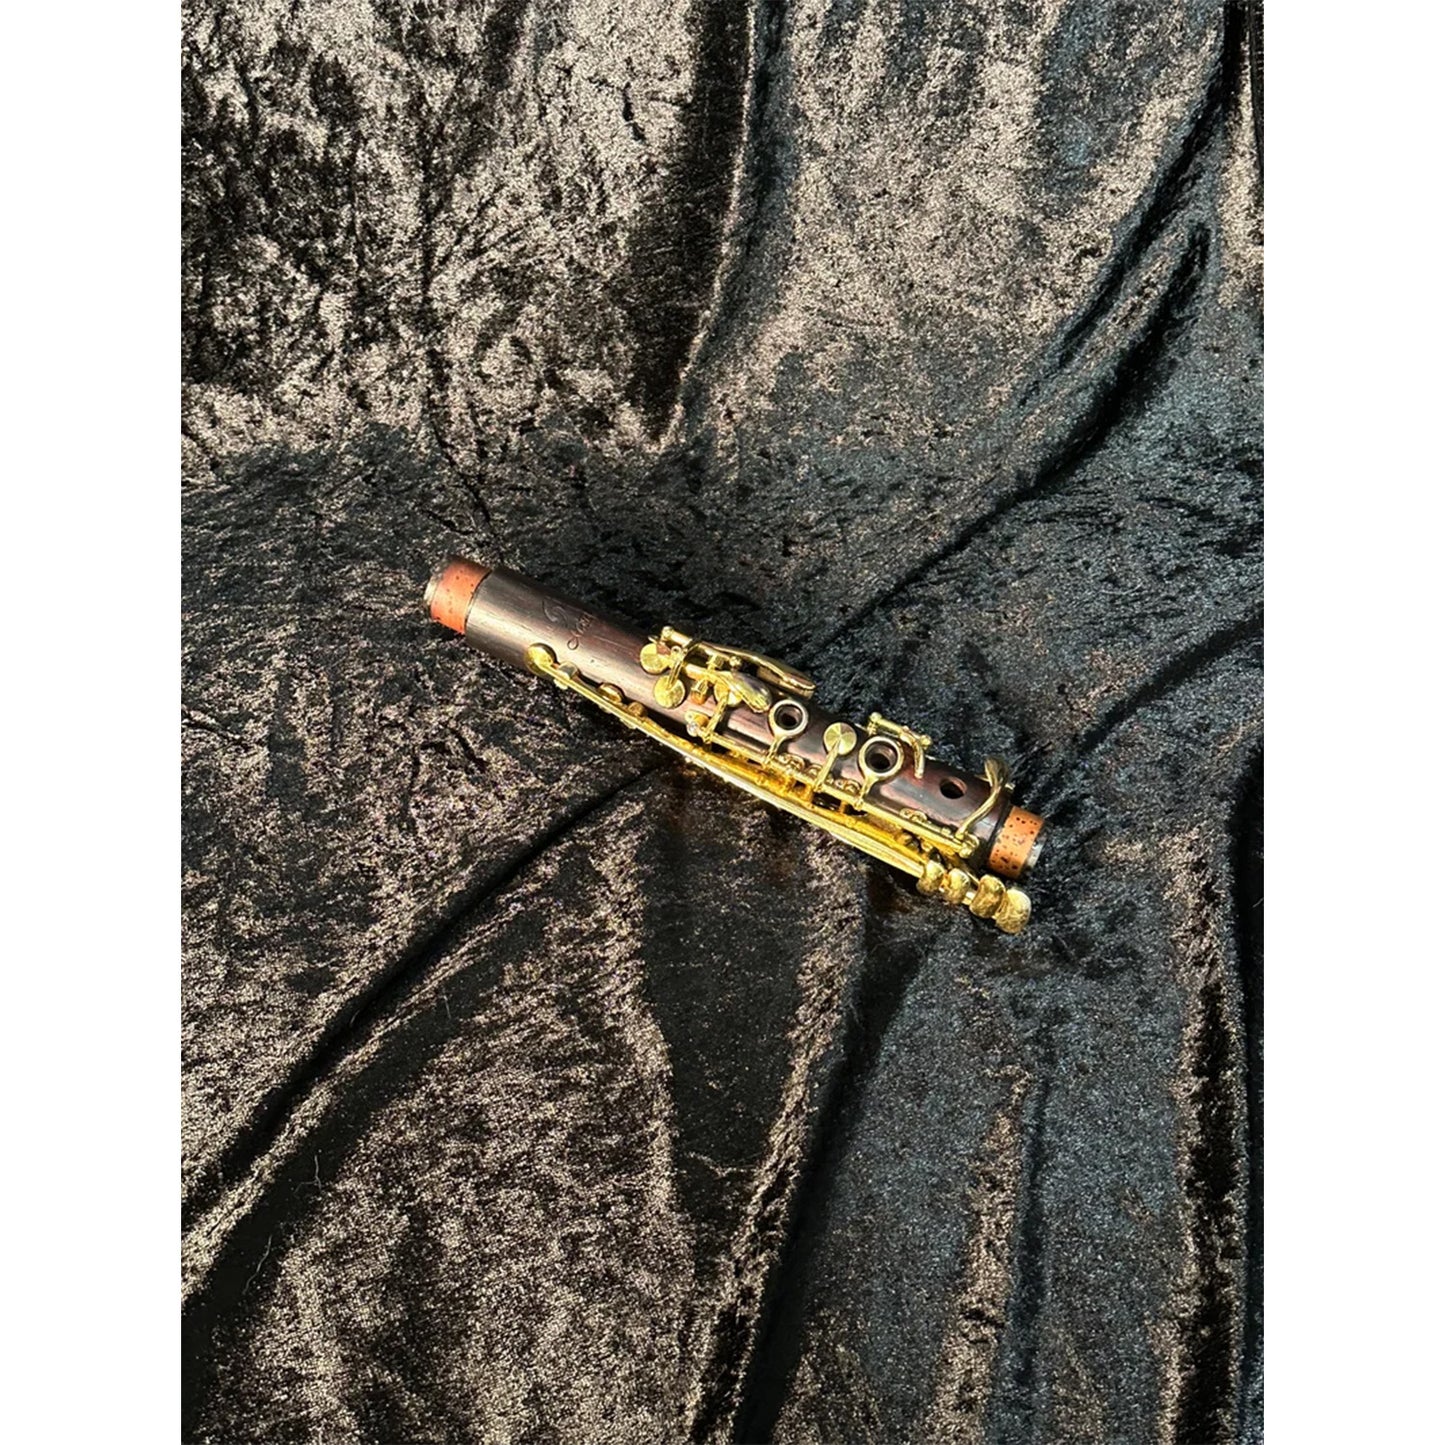 Upper joint of Backun cocobolo and gold Bb clarinet, on black velvet in bright light